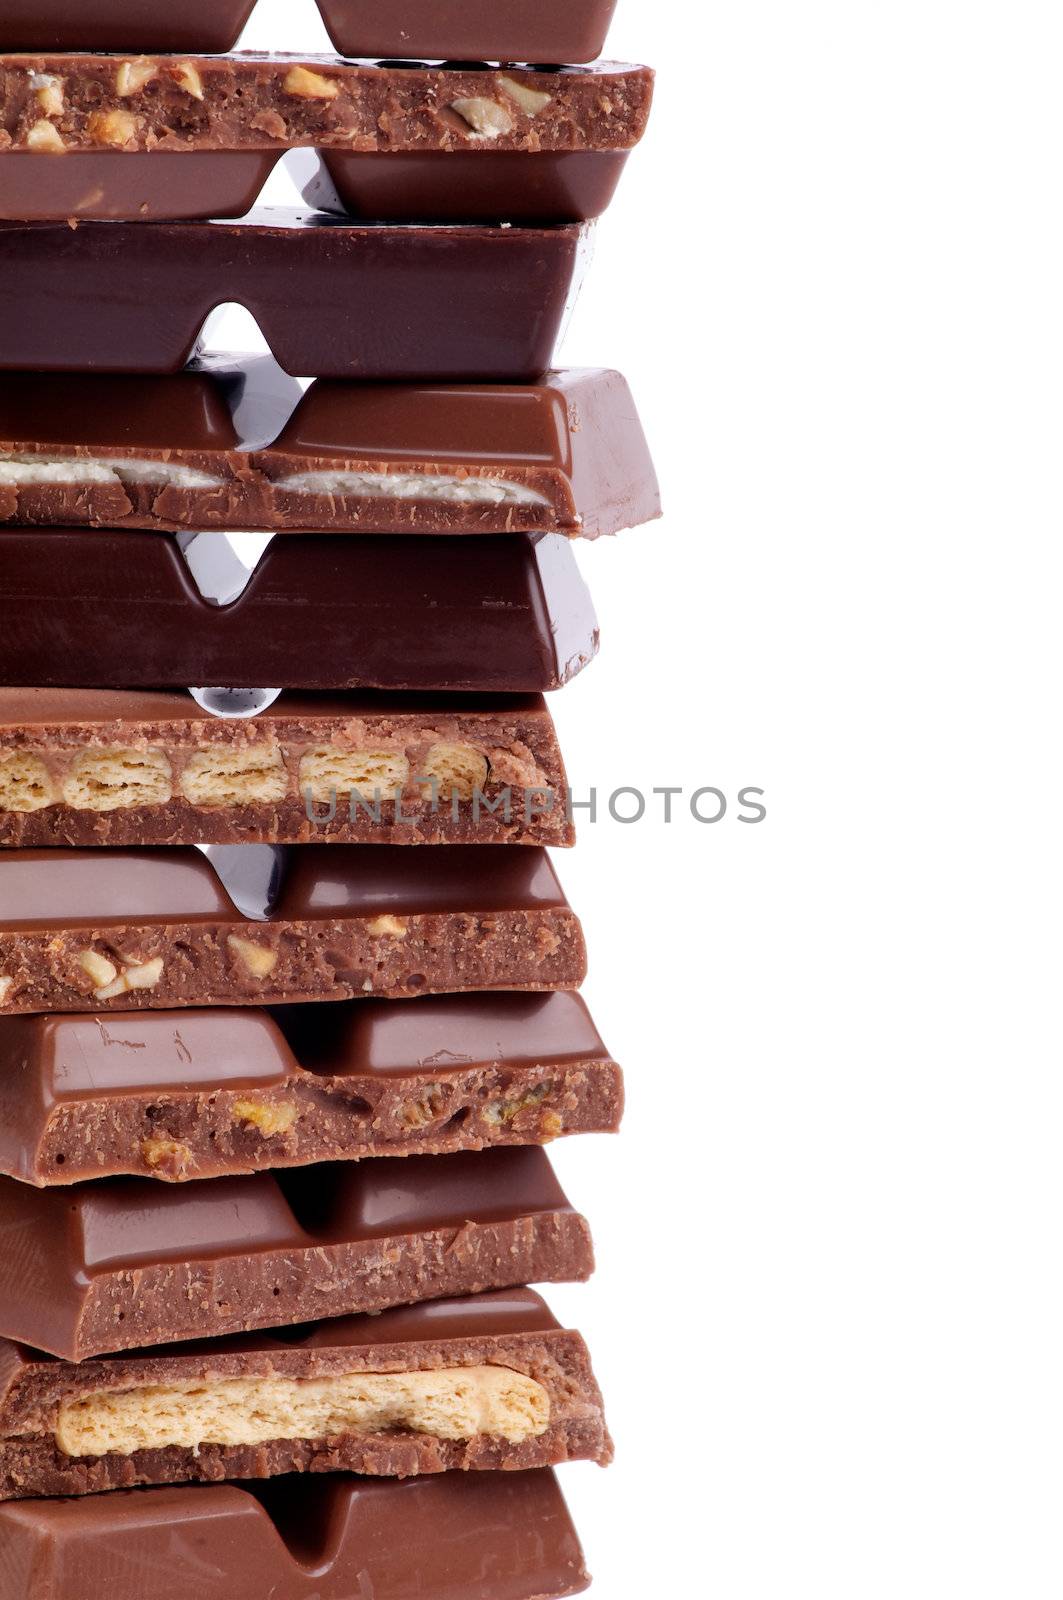 Frame of Chocolate Blocks by zhekos